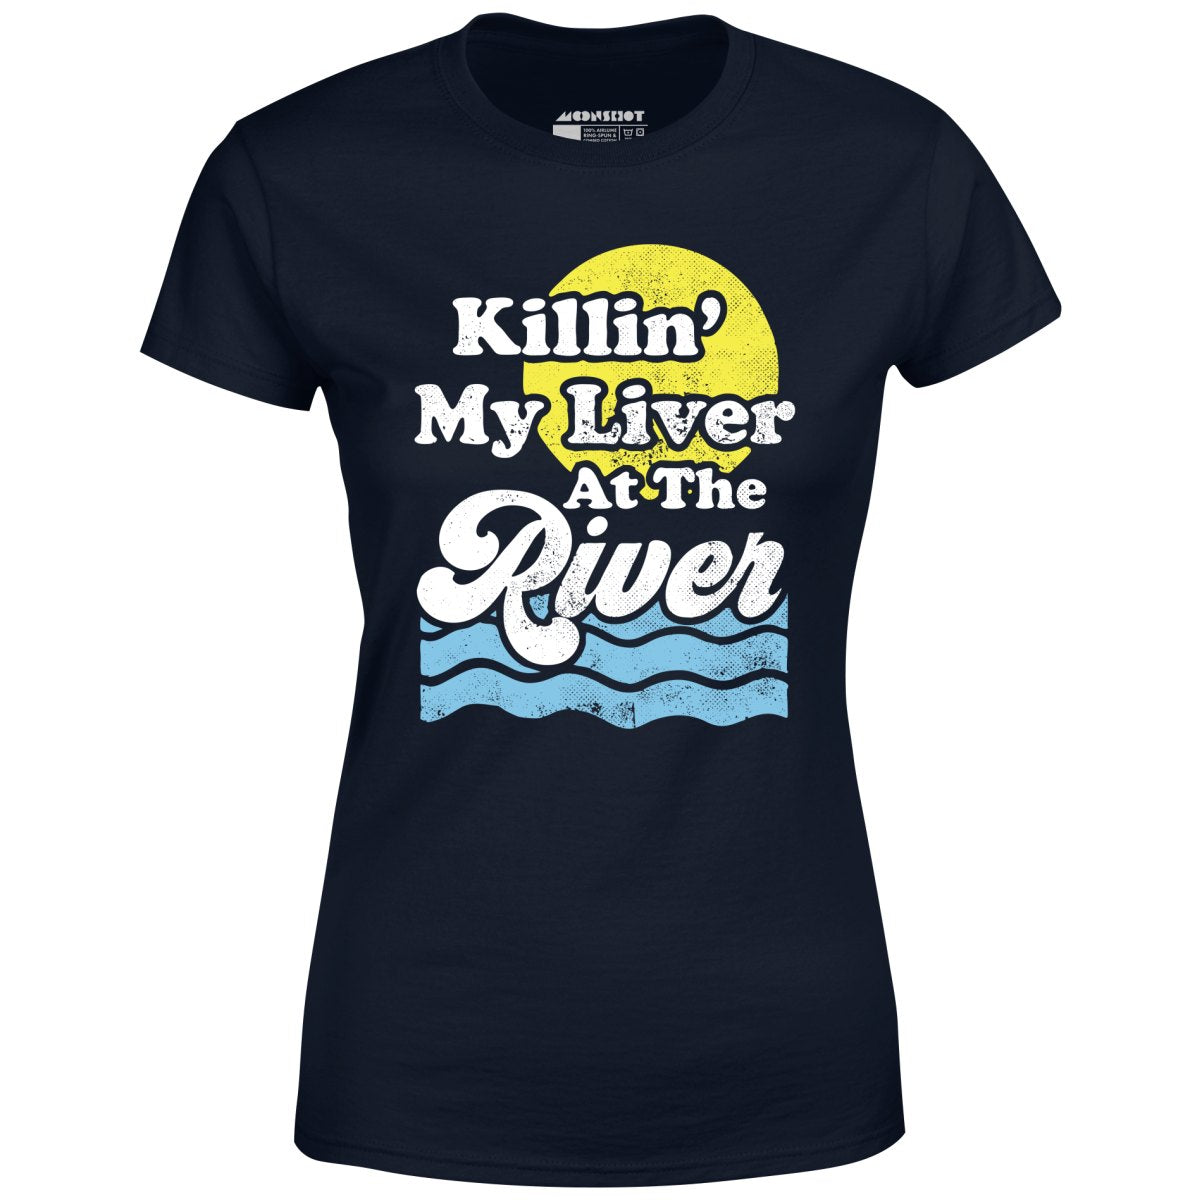 Killin' My Liver At The River - Women's T-Shirt